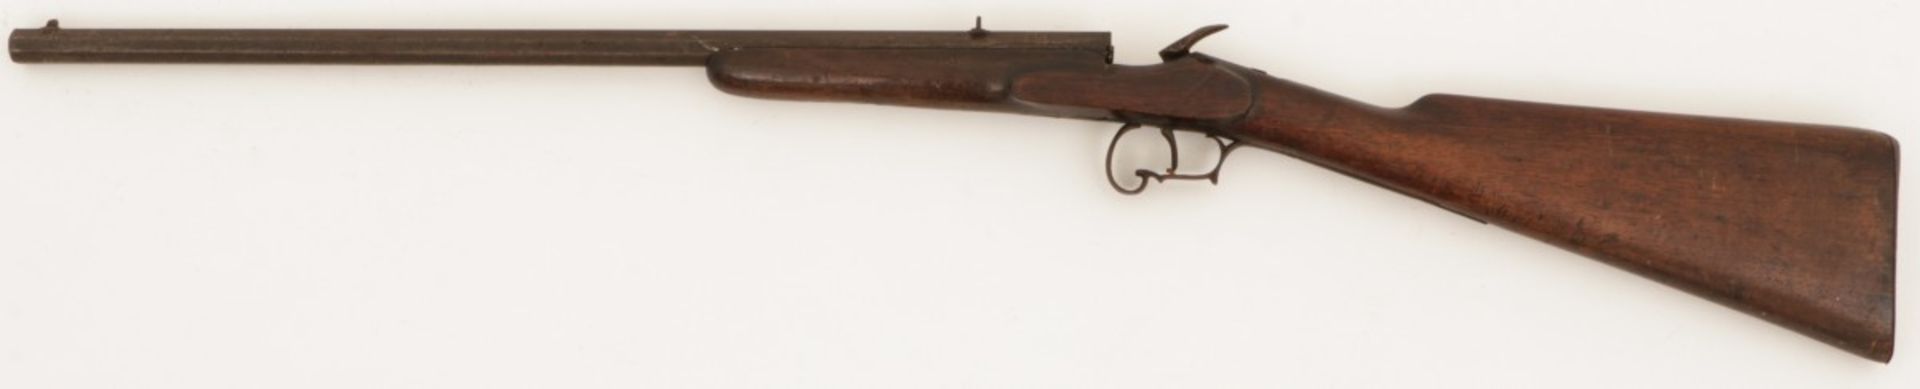 A Flobert-system rifle, France or Belgium, ca. 1900.